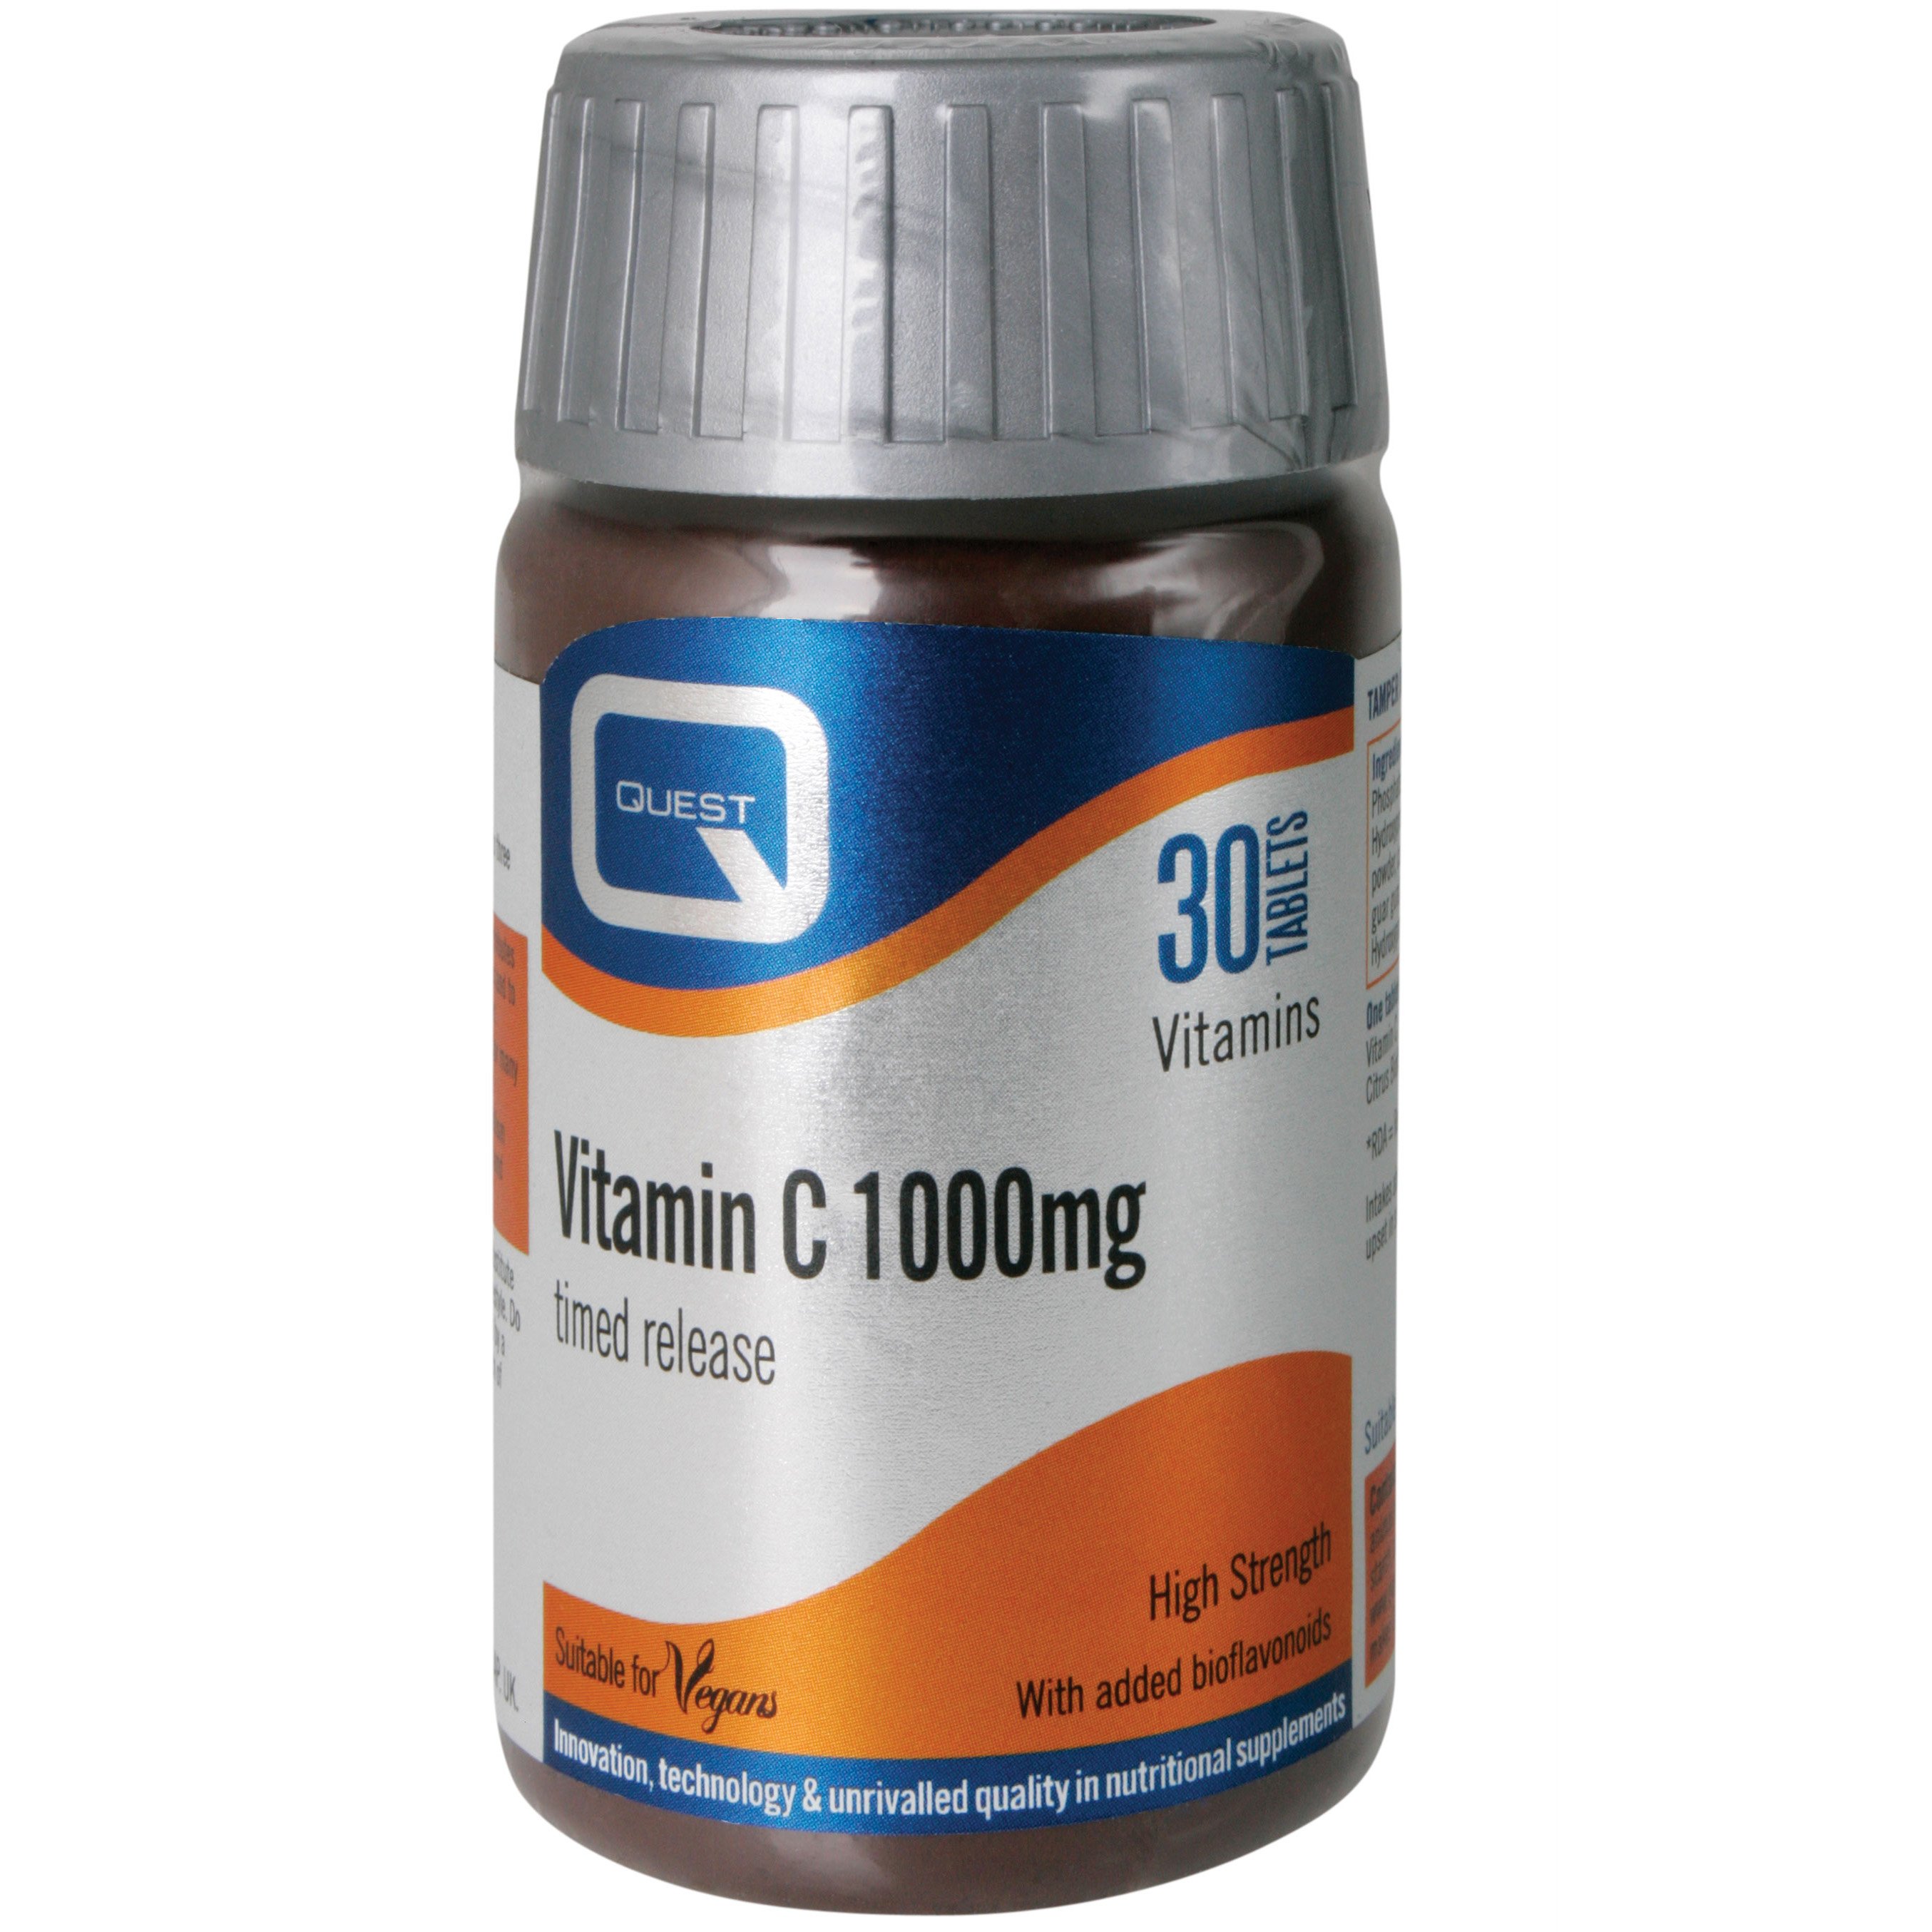 Quest Vitamin C 1000mg Timed Release Συμπλήρωμα Διατροφής Βιταμίνης C σε Συνδυασμό με Βιοφλαβονοειδή - 60 tabs